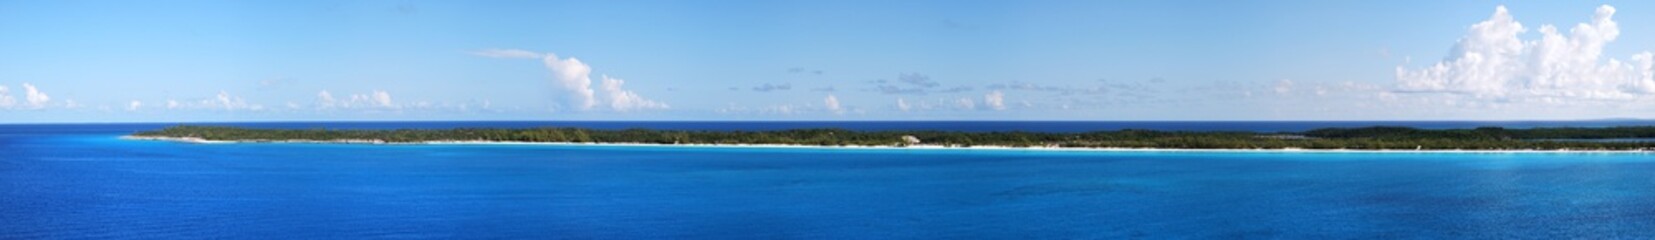 Bahamas Uninhabited Tourist Island Panorama